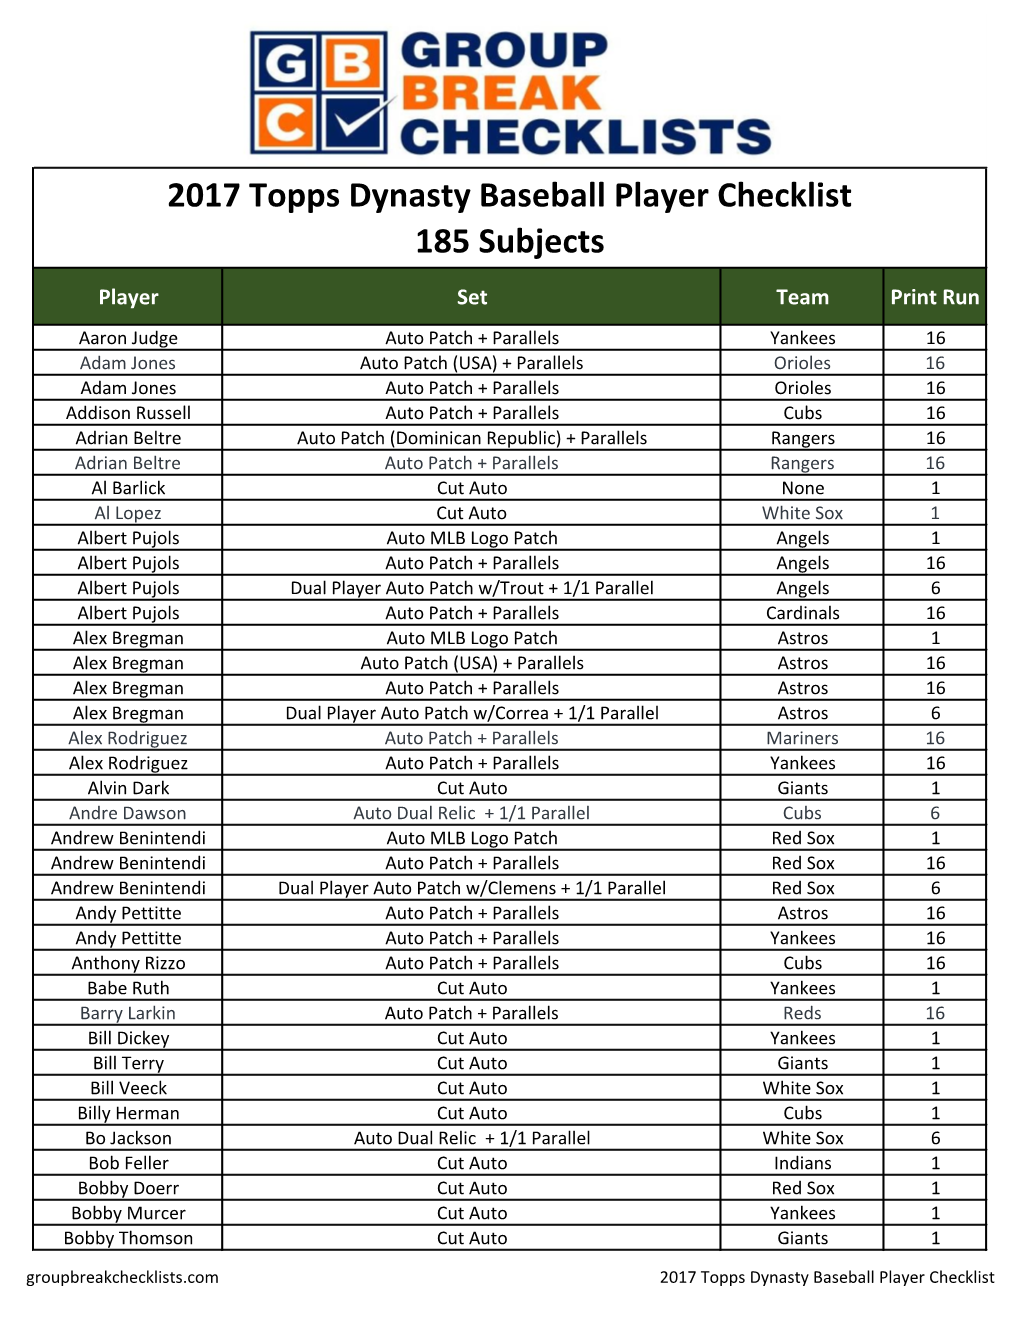 2017 Topps Dynasty Baseball Checklist